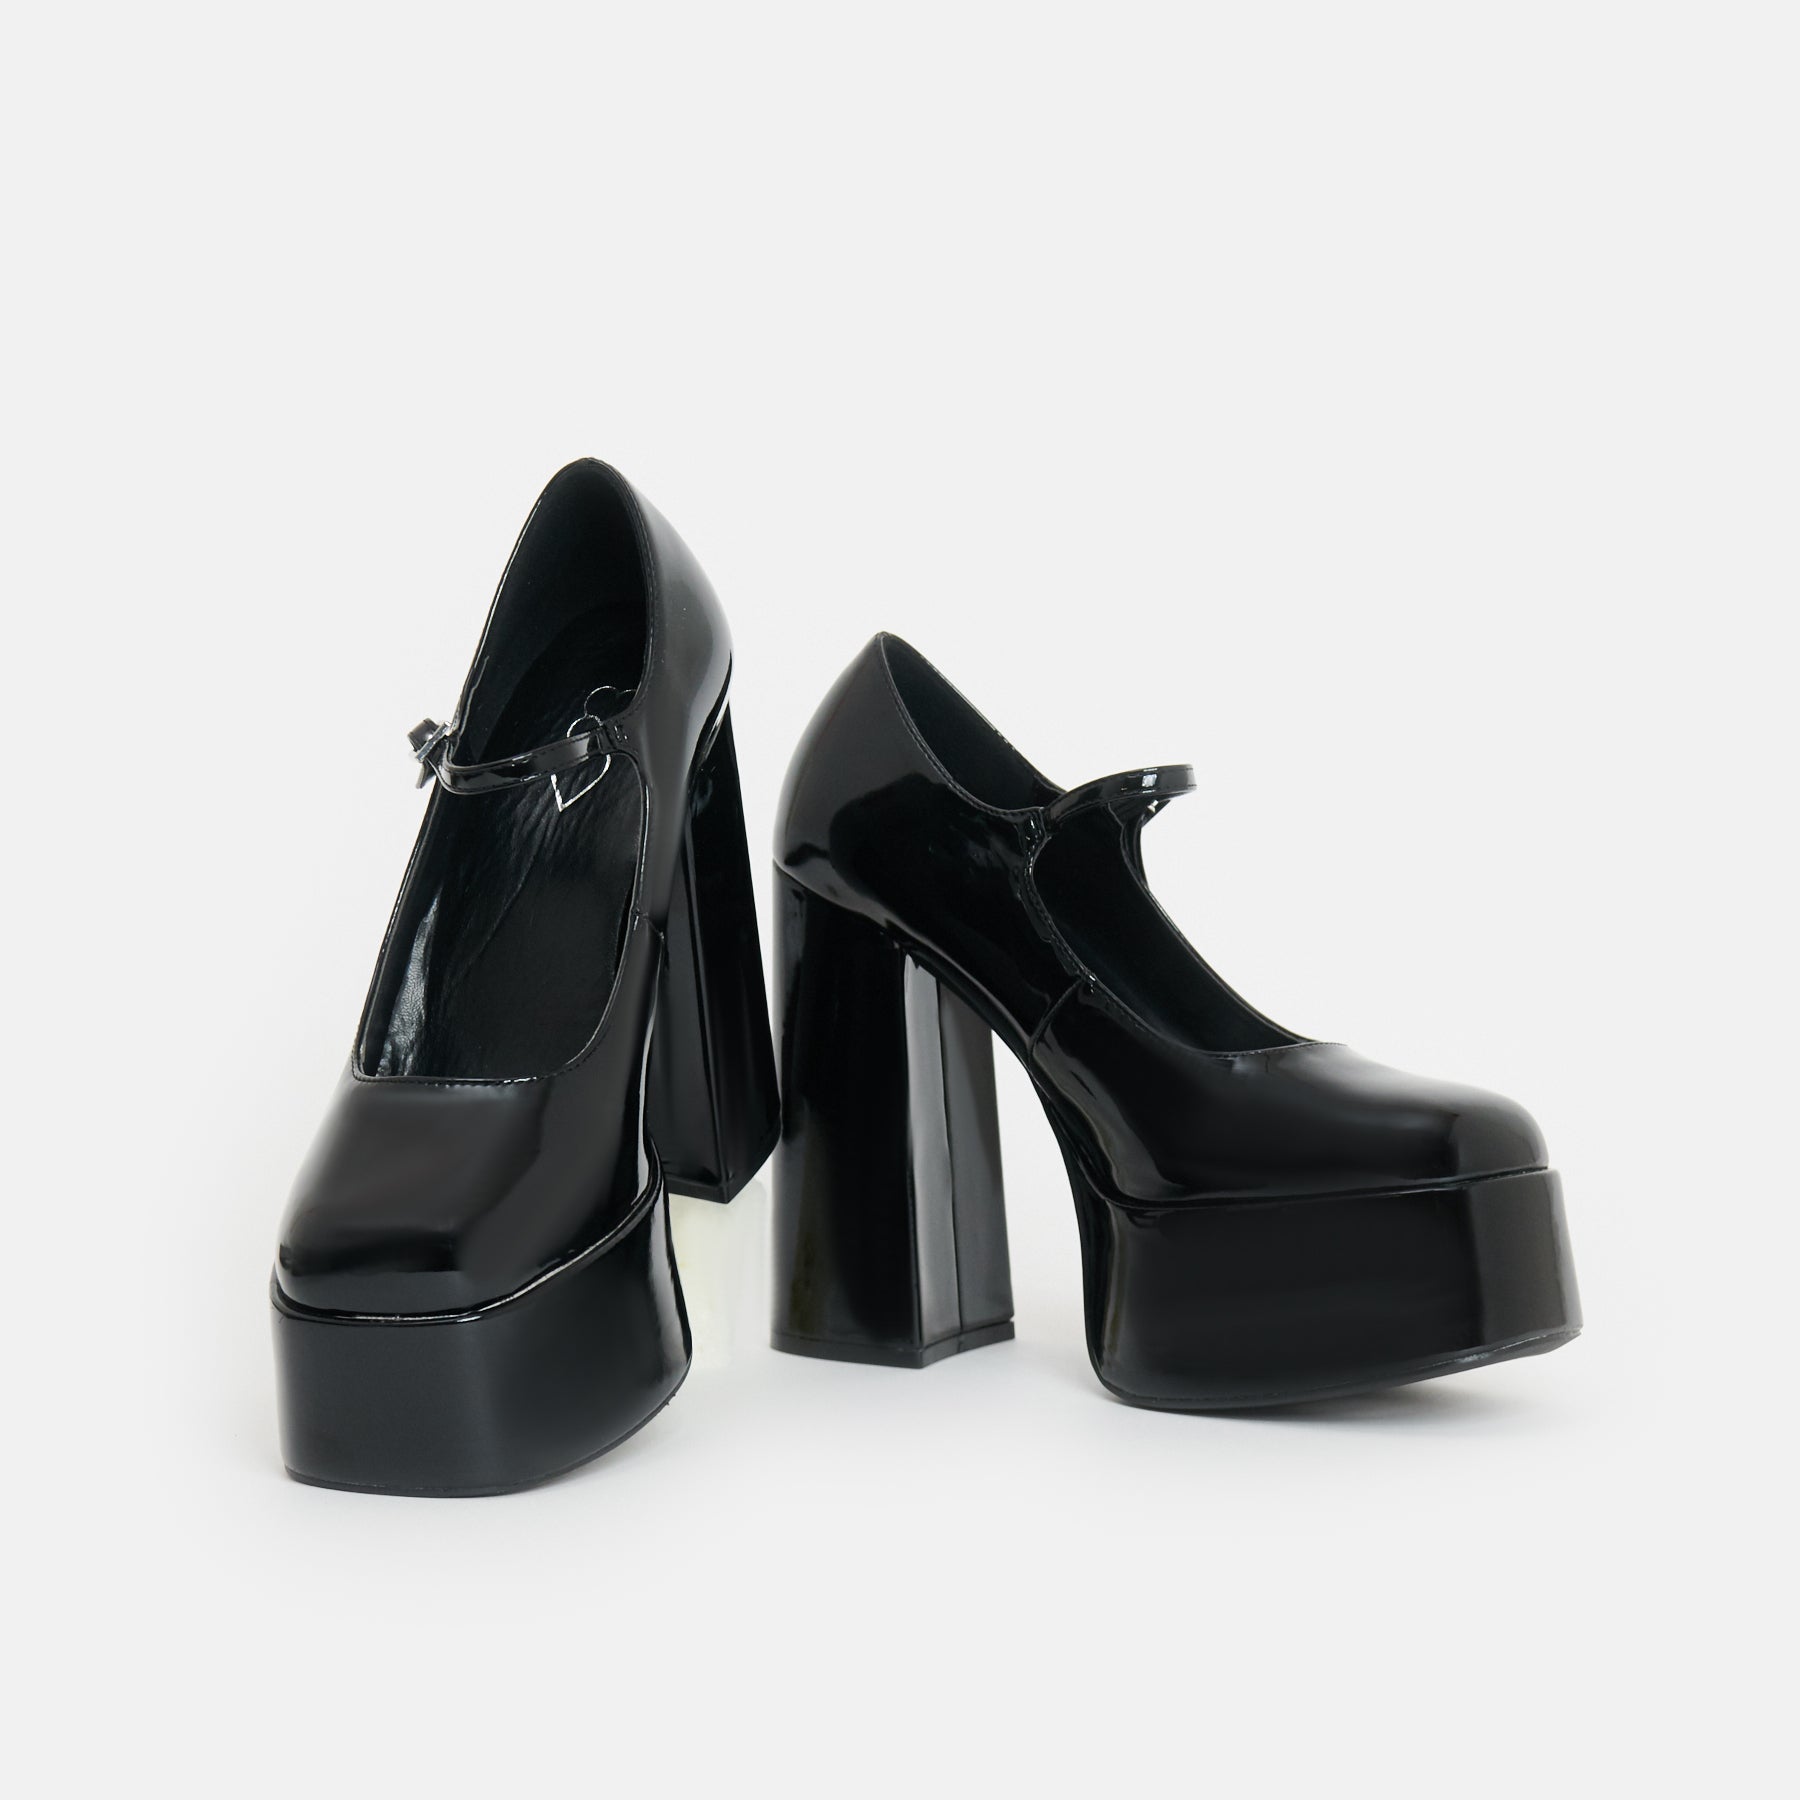 Darkbloom Black Patent Platform Heels - Shoes - KOI Footwear - Black - Front and Side View